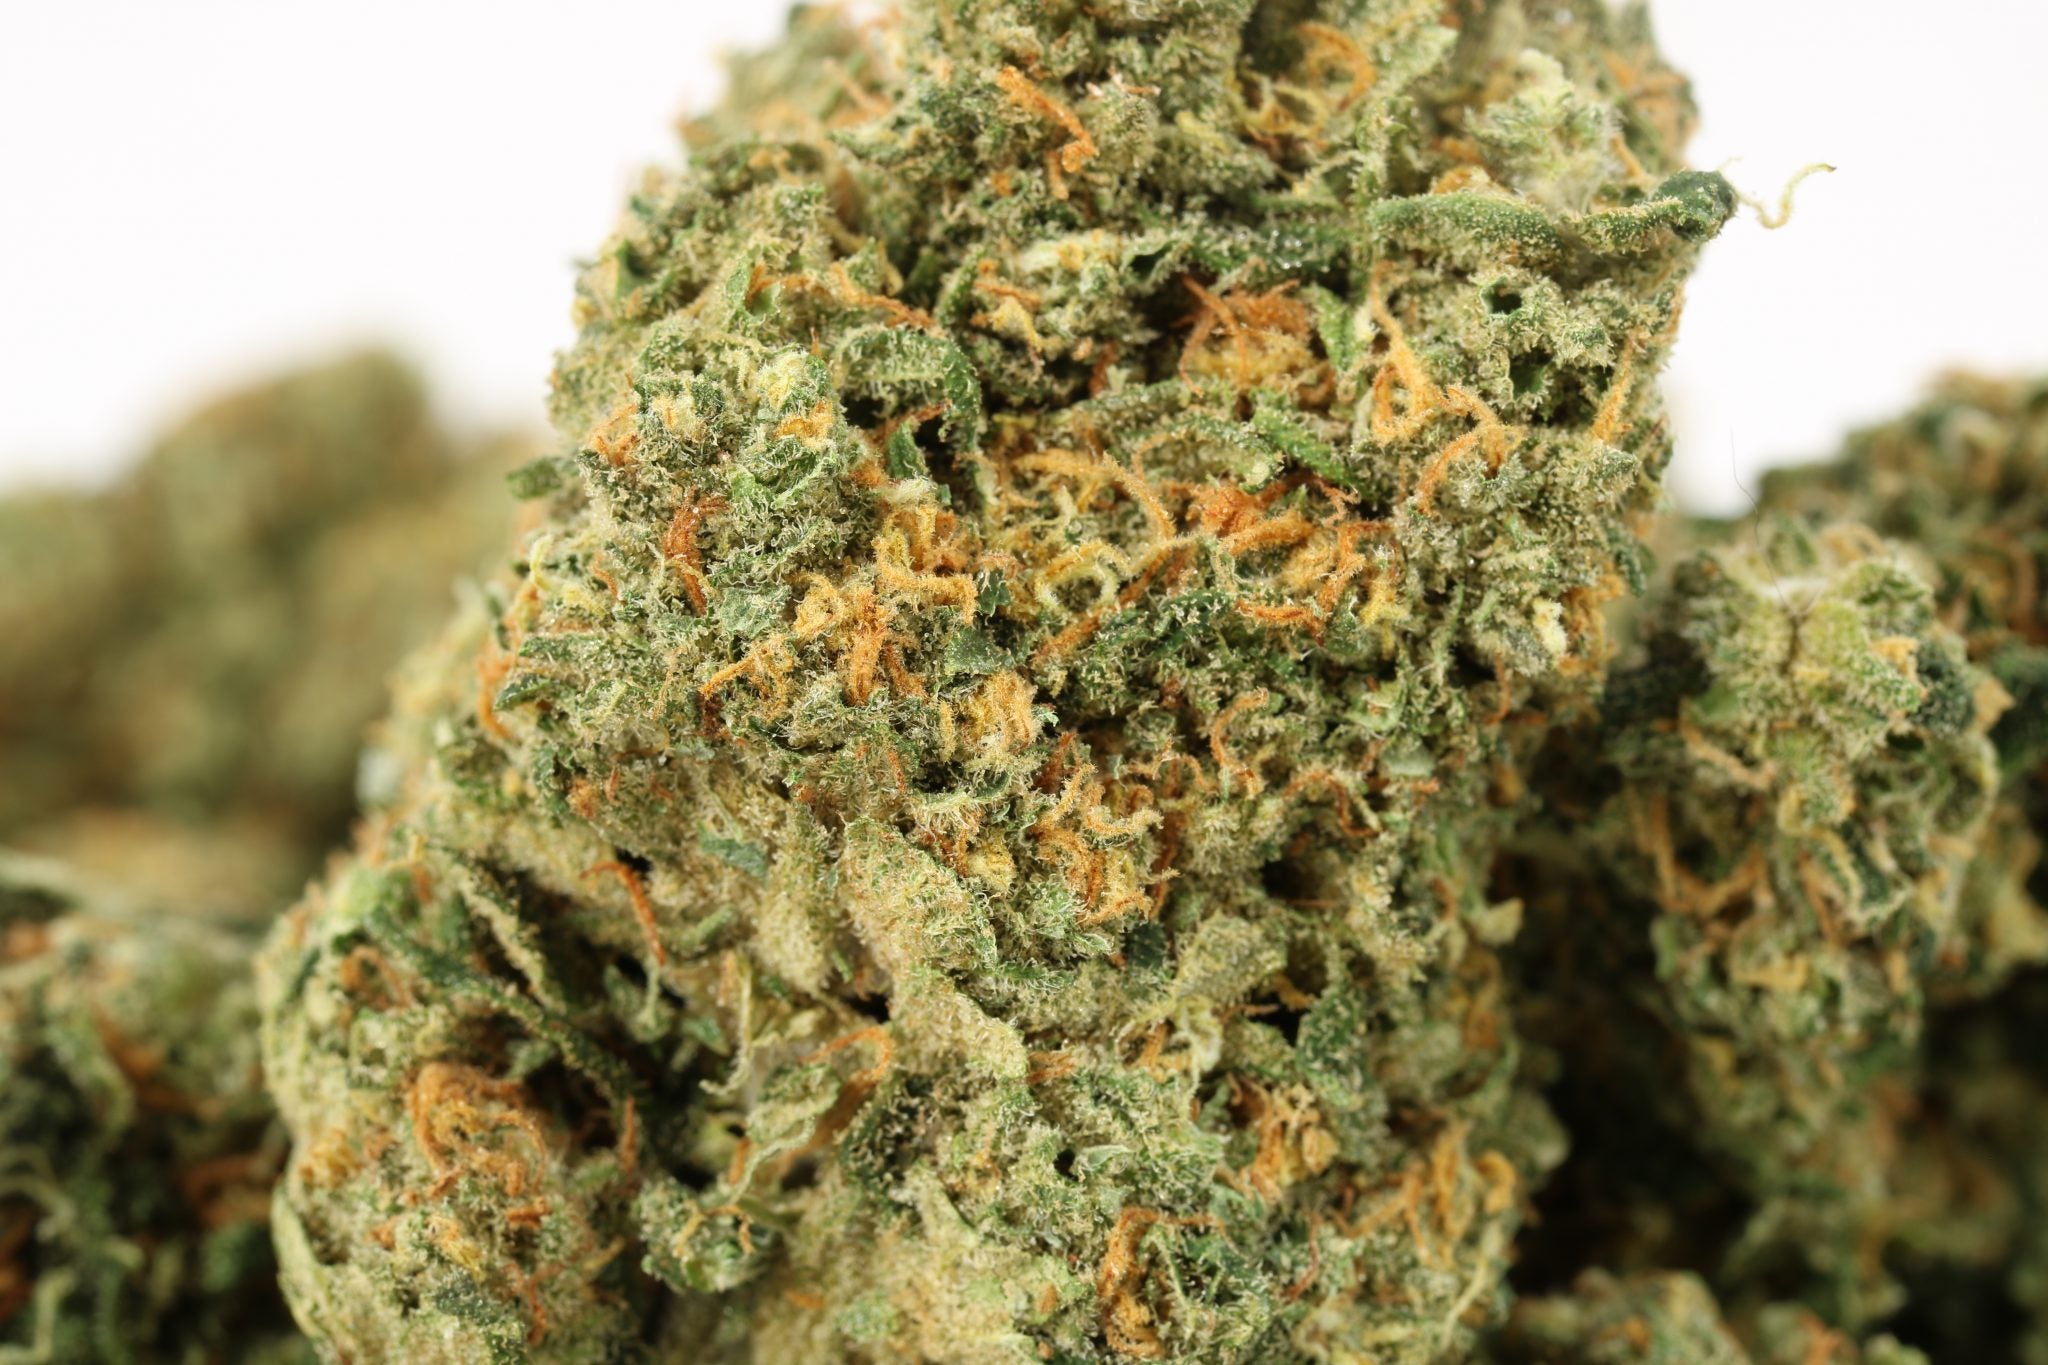 a close up of a marijuana plant on a white background